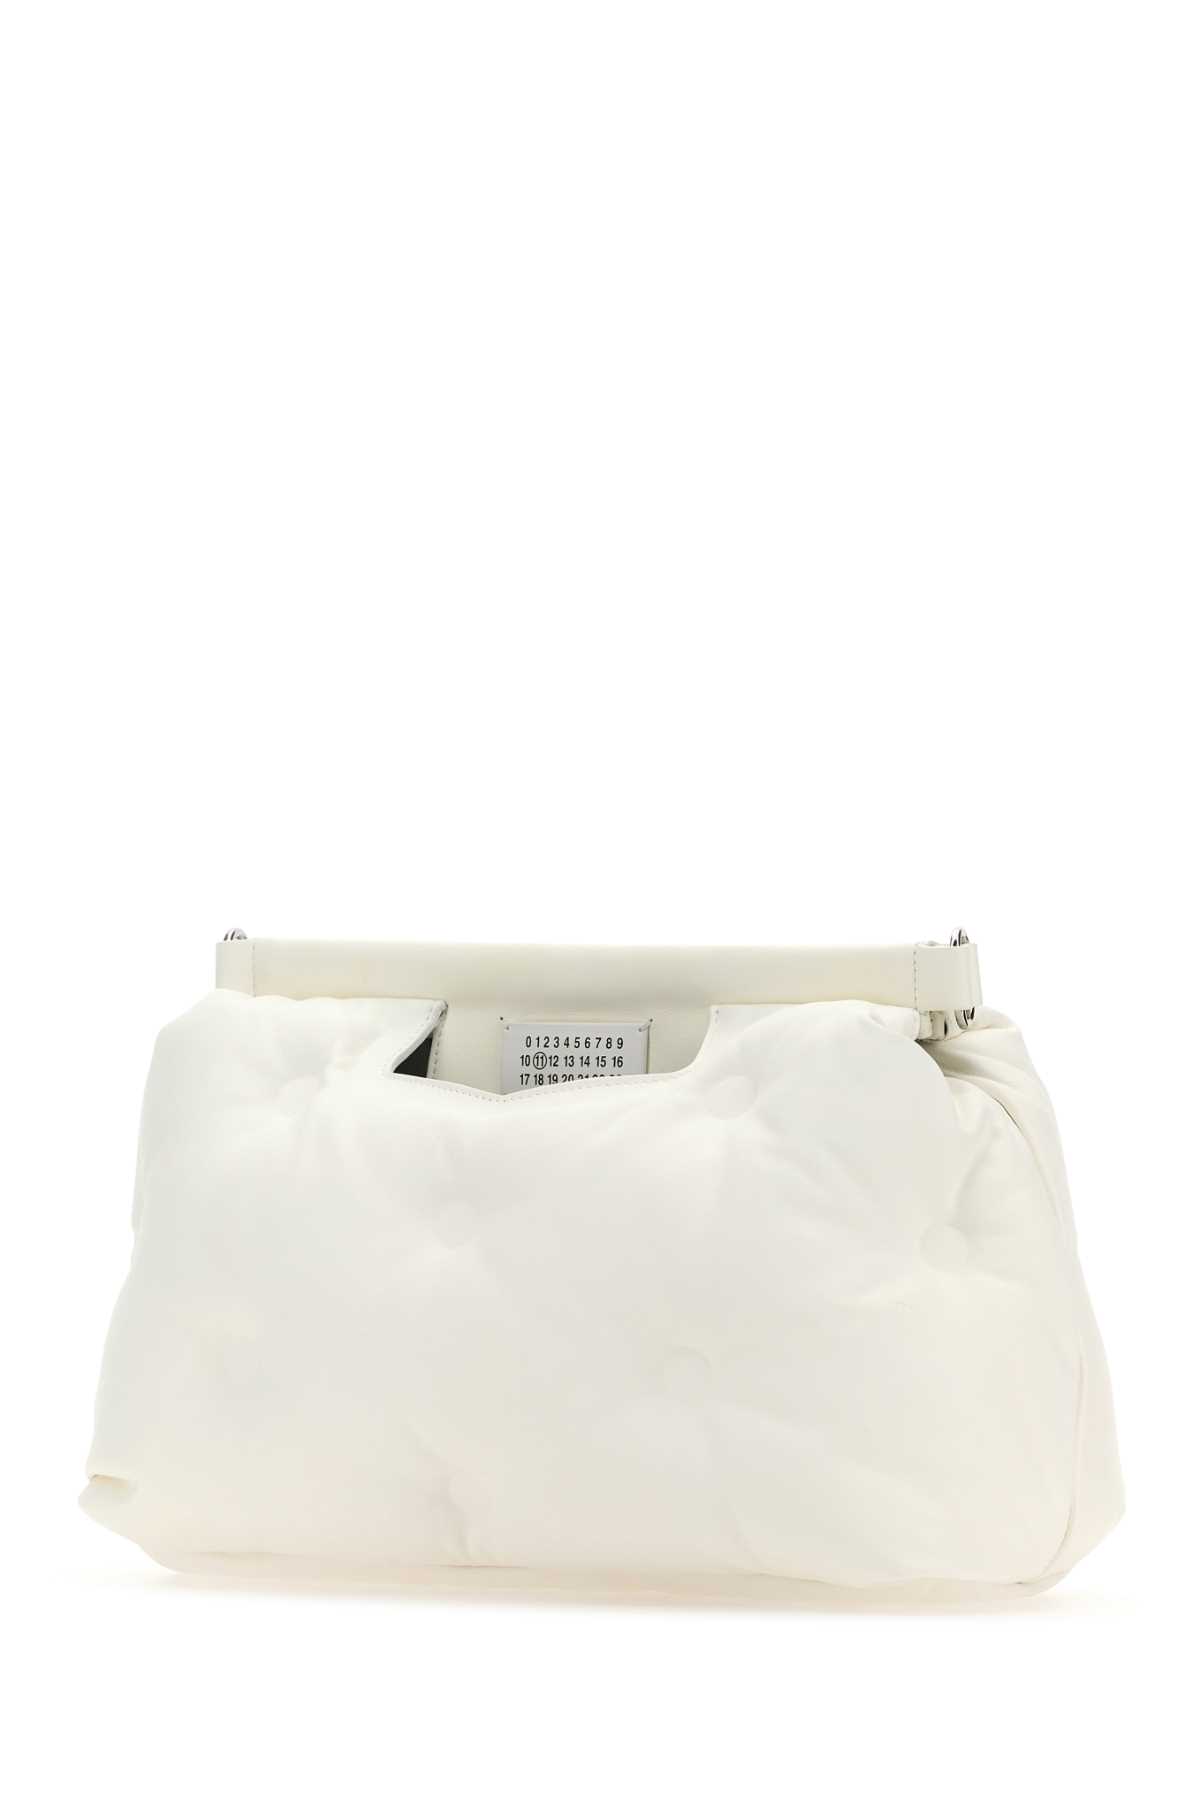 Maison Margiela White Nappa Leather Medium Glam Slam Classique Crossbody Bag